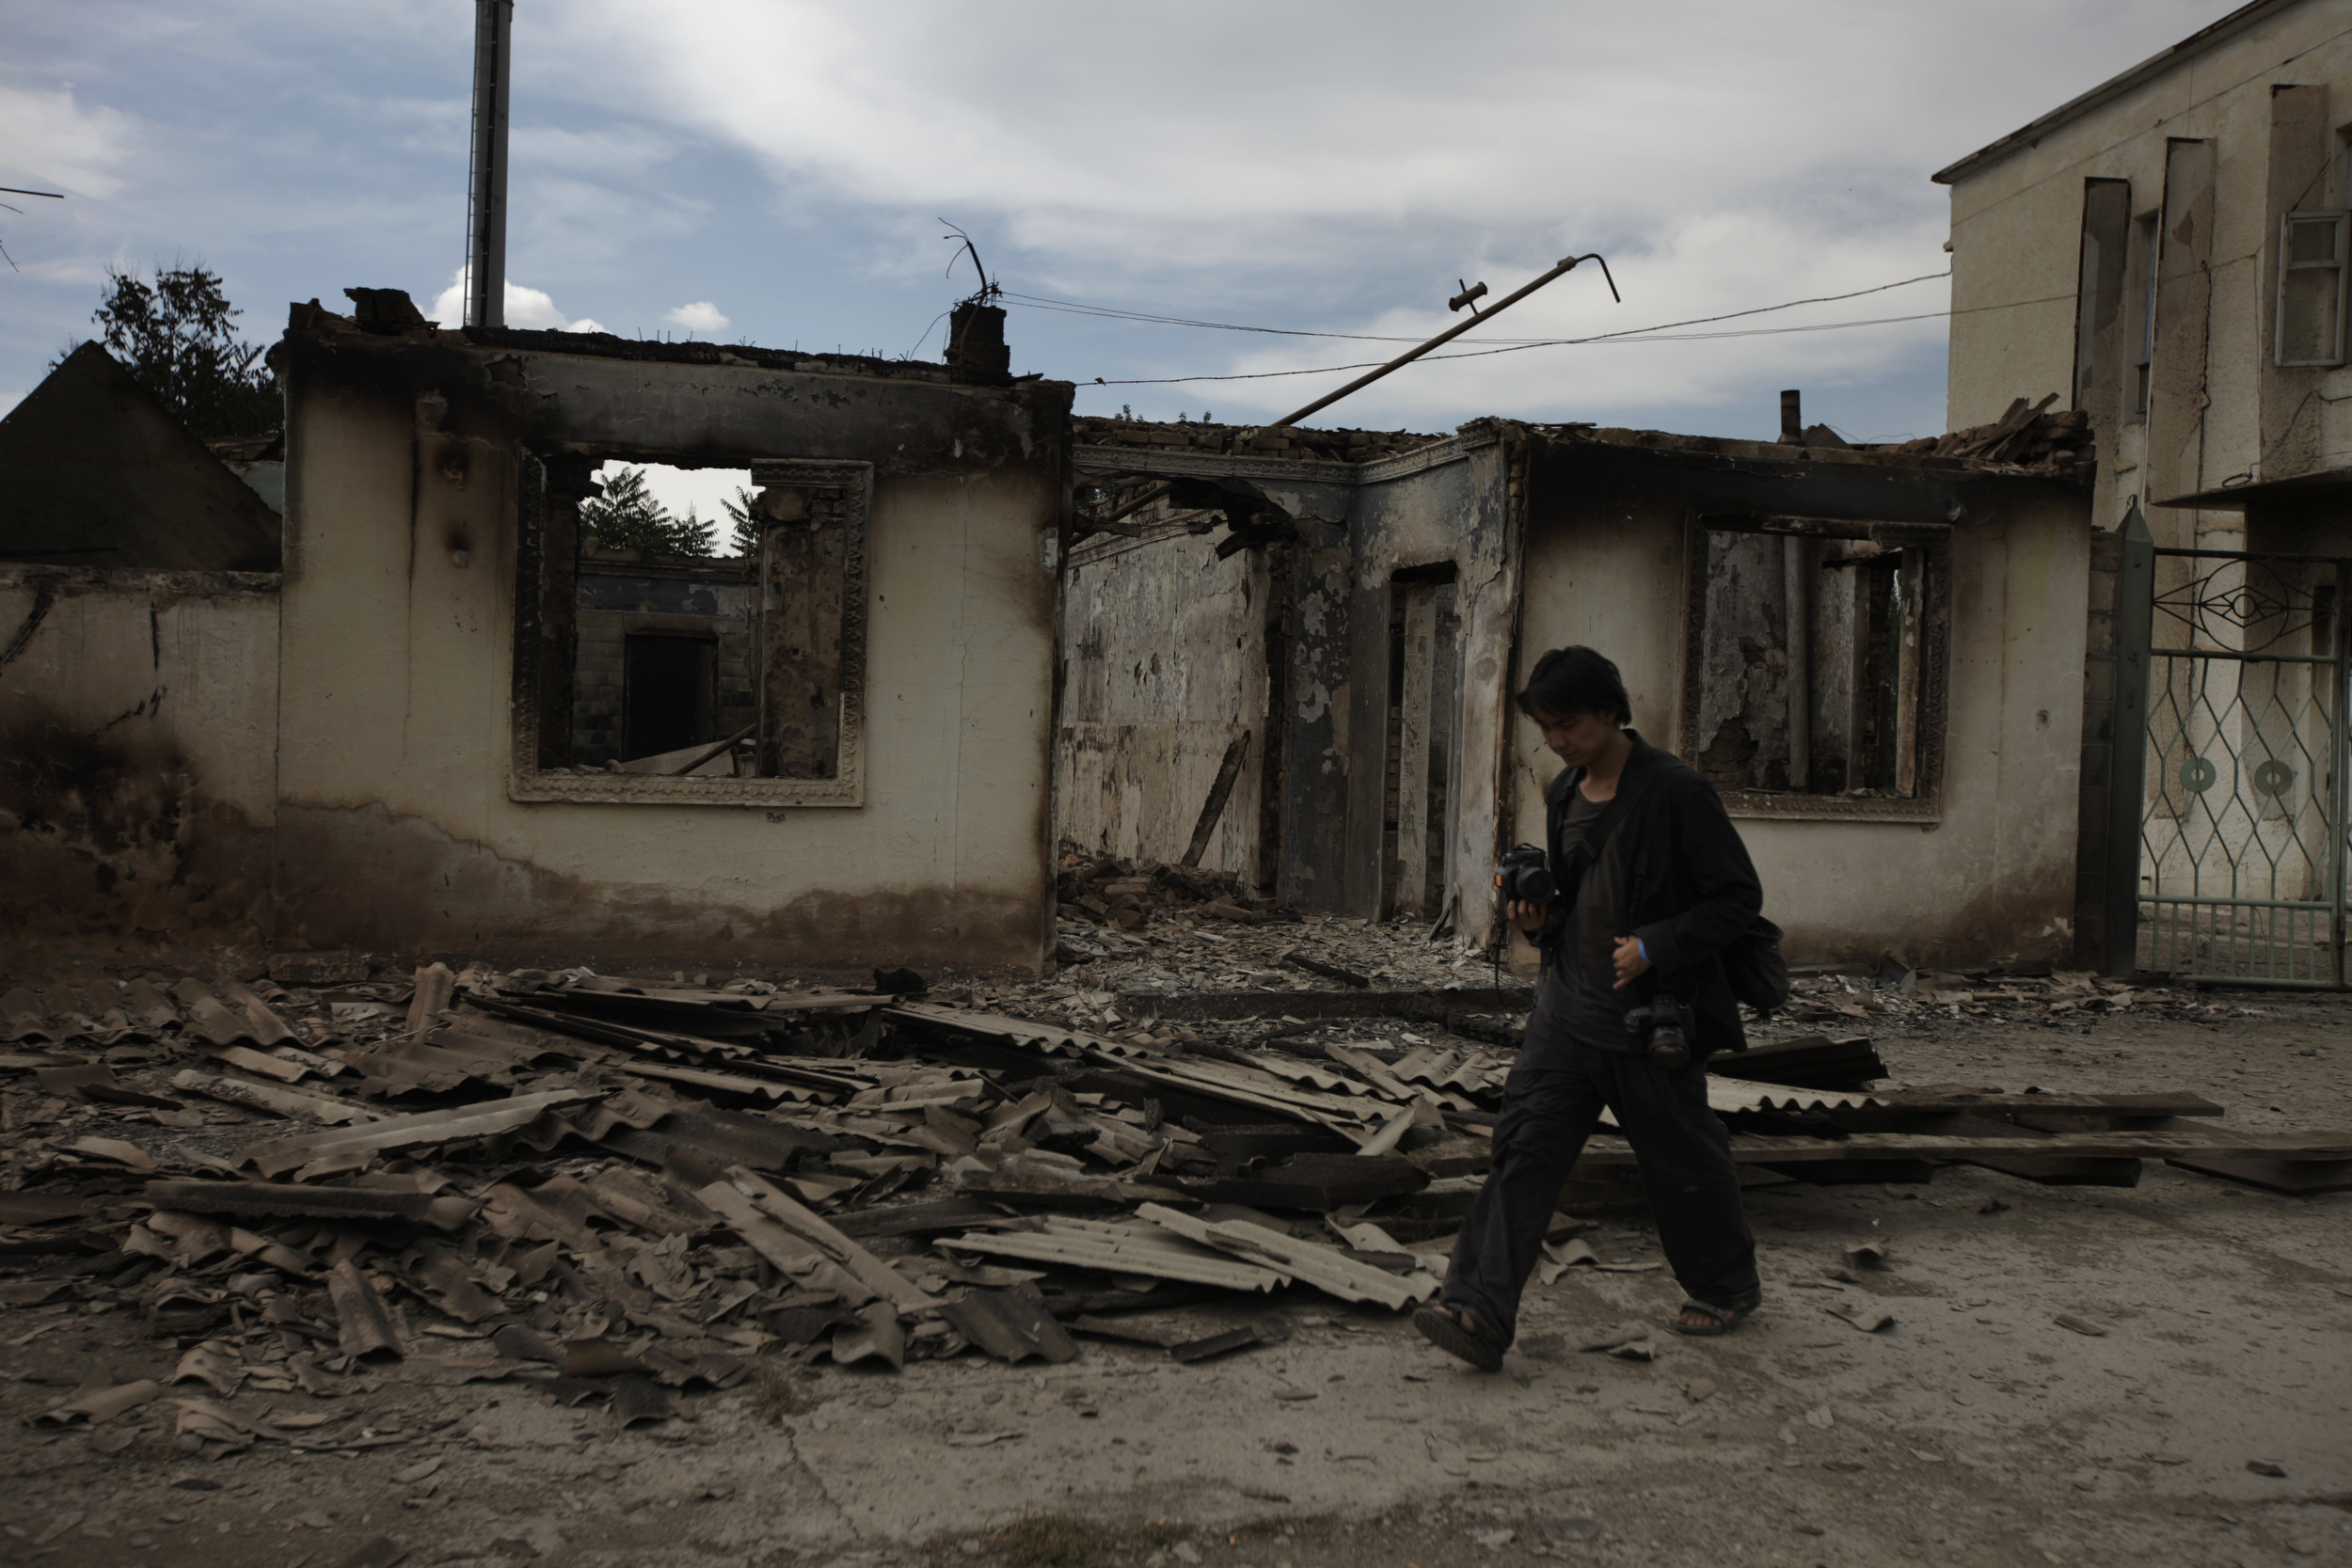 Ed Ou photographs a burned home after ethnic Kyrgyz mobs rampaged through minority Uzbek enclaves, burning homes and businesses in Shark, Kyrgyzstan. (Marina Gorobevskaya)